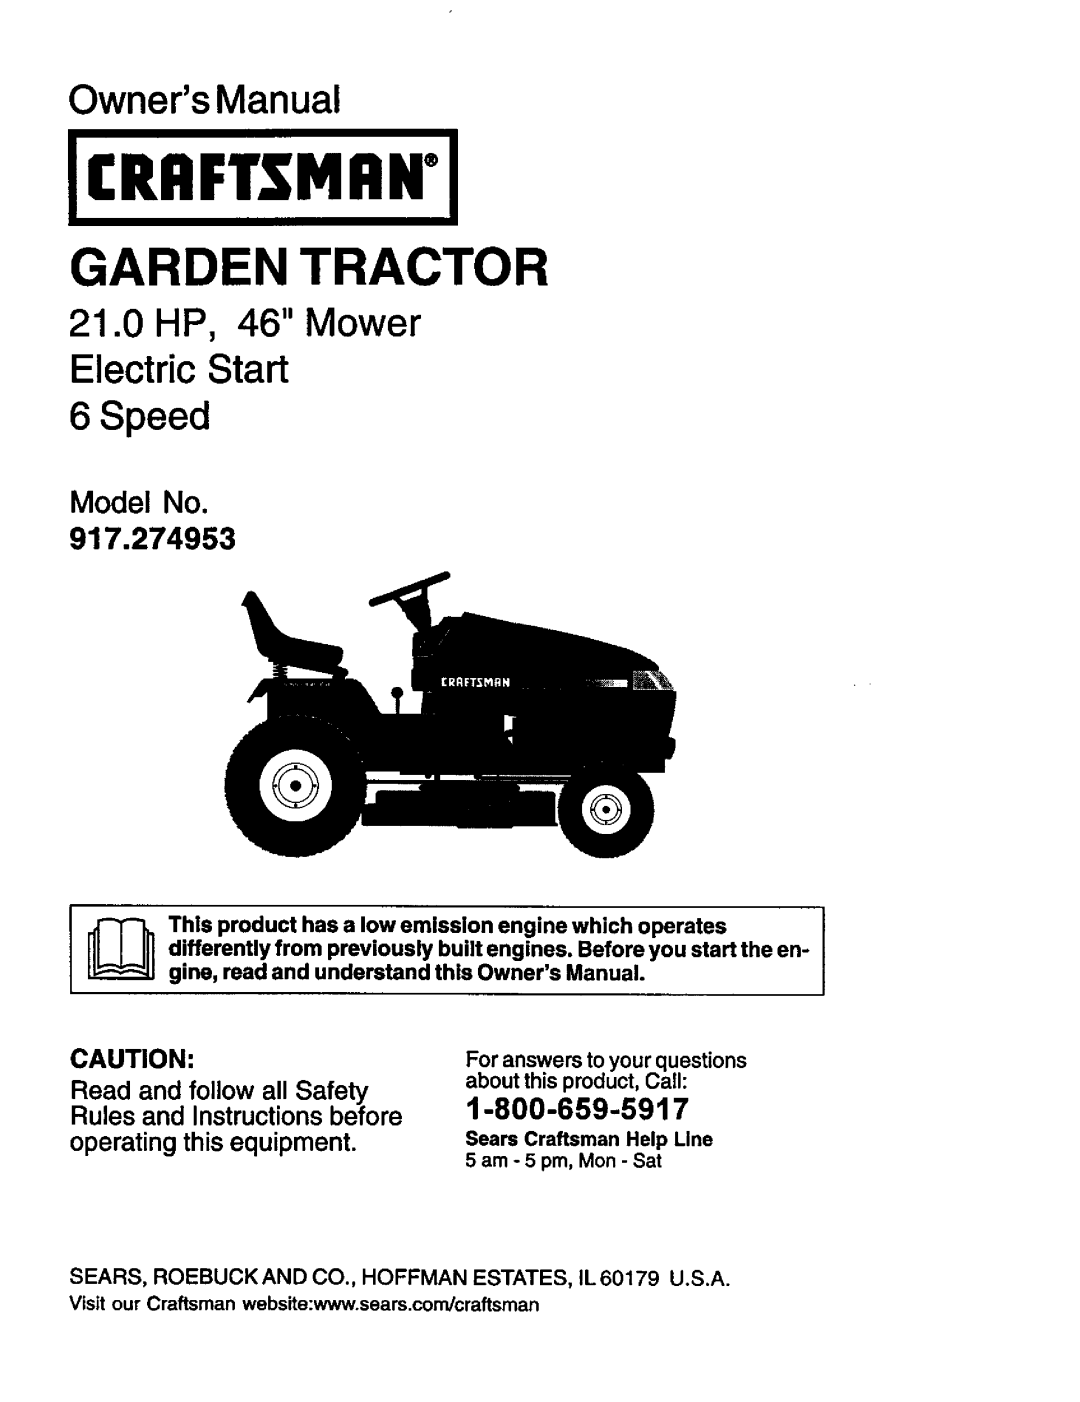 Craftsman 917.274953 manual 1-800-659-5917, operating this equipment, Icrrftsmrni, Garden Tractor, OwnersManual, Speed 